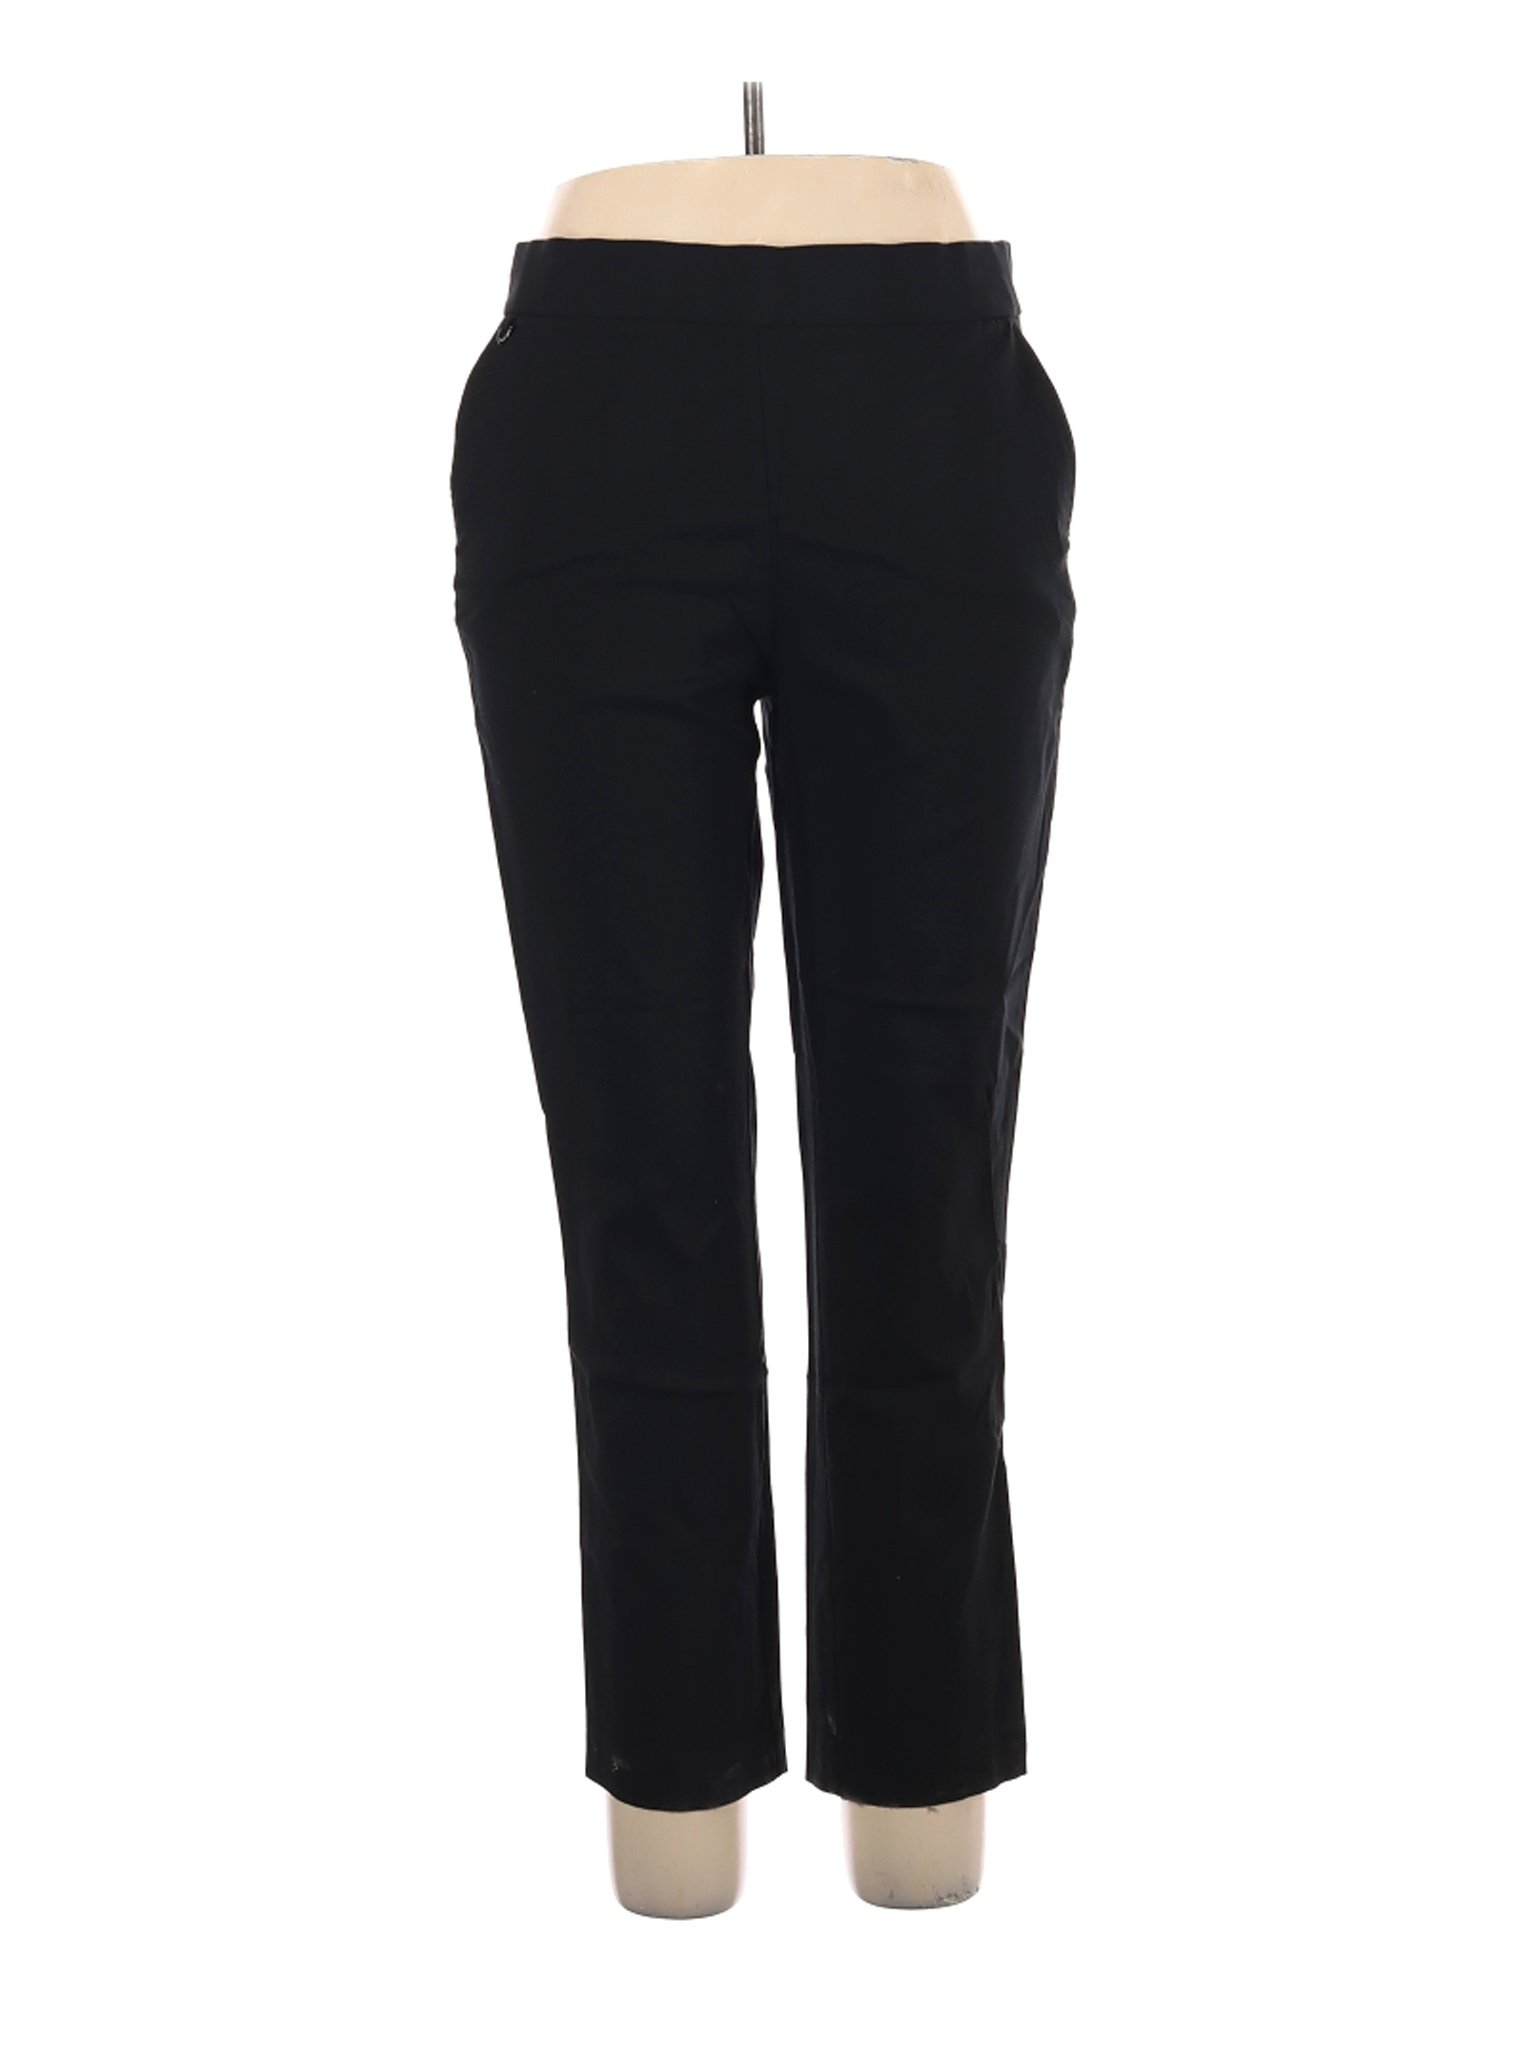 Counterparts Women Black Casual Pants 16 Petites | eBay